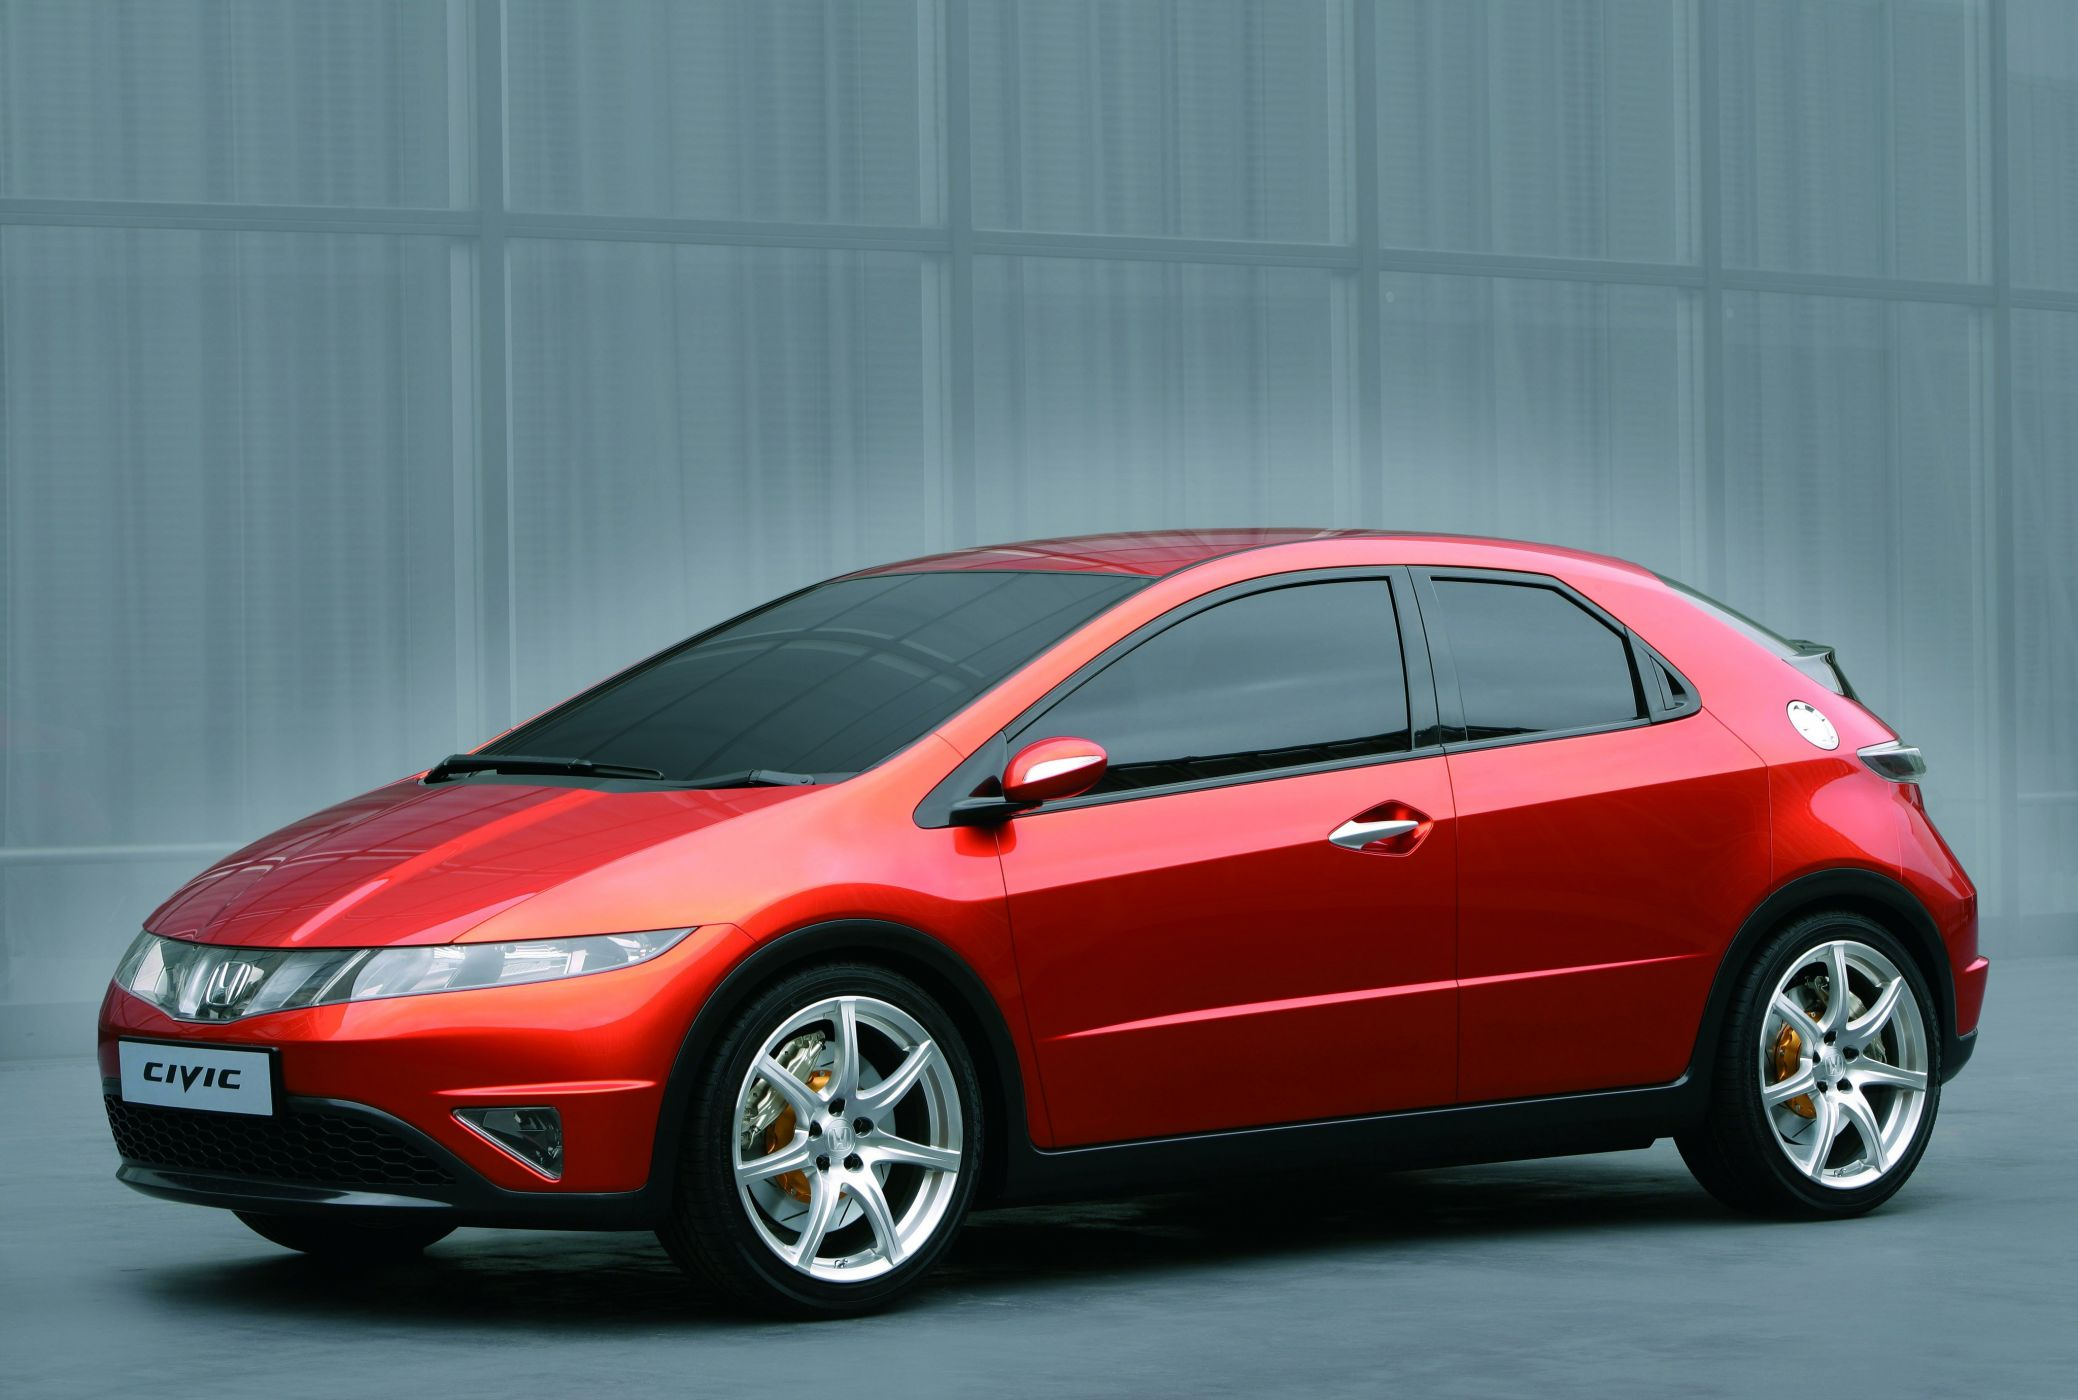 Хэтчбек 5д. Хонда Цивик 5д хэтчбек. Honda Civic 8 5d (2005-2011). Honda Civic 5d оранжевый. Хонда Цивик 5д красная.